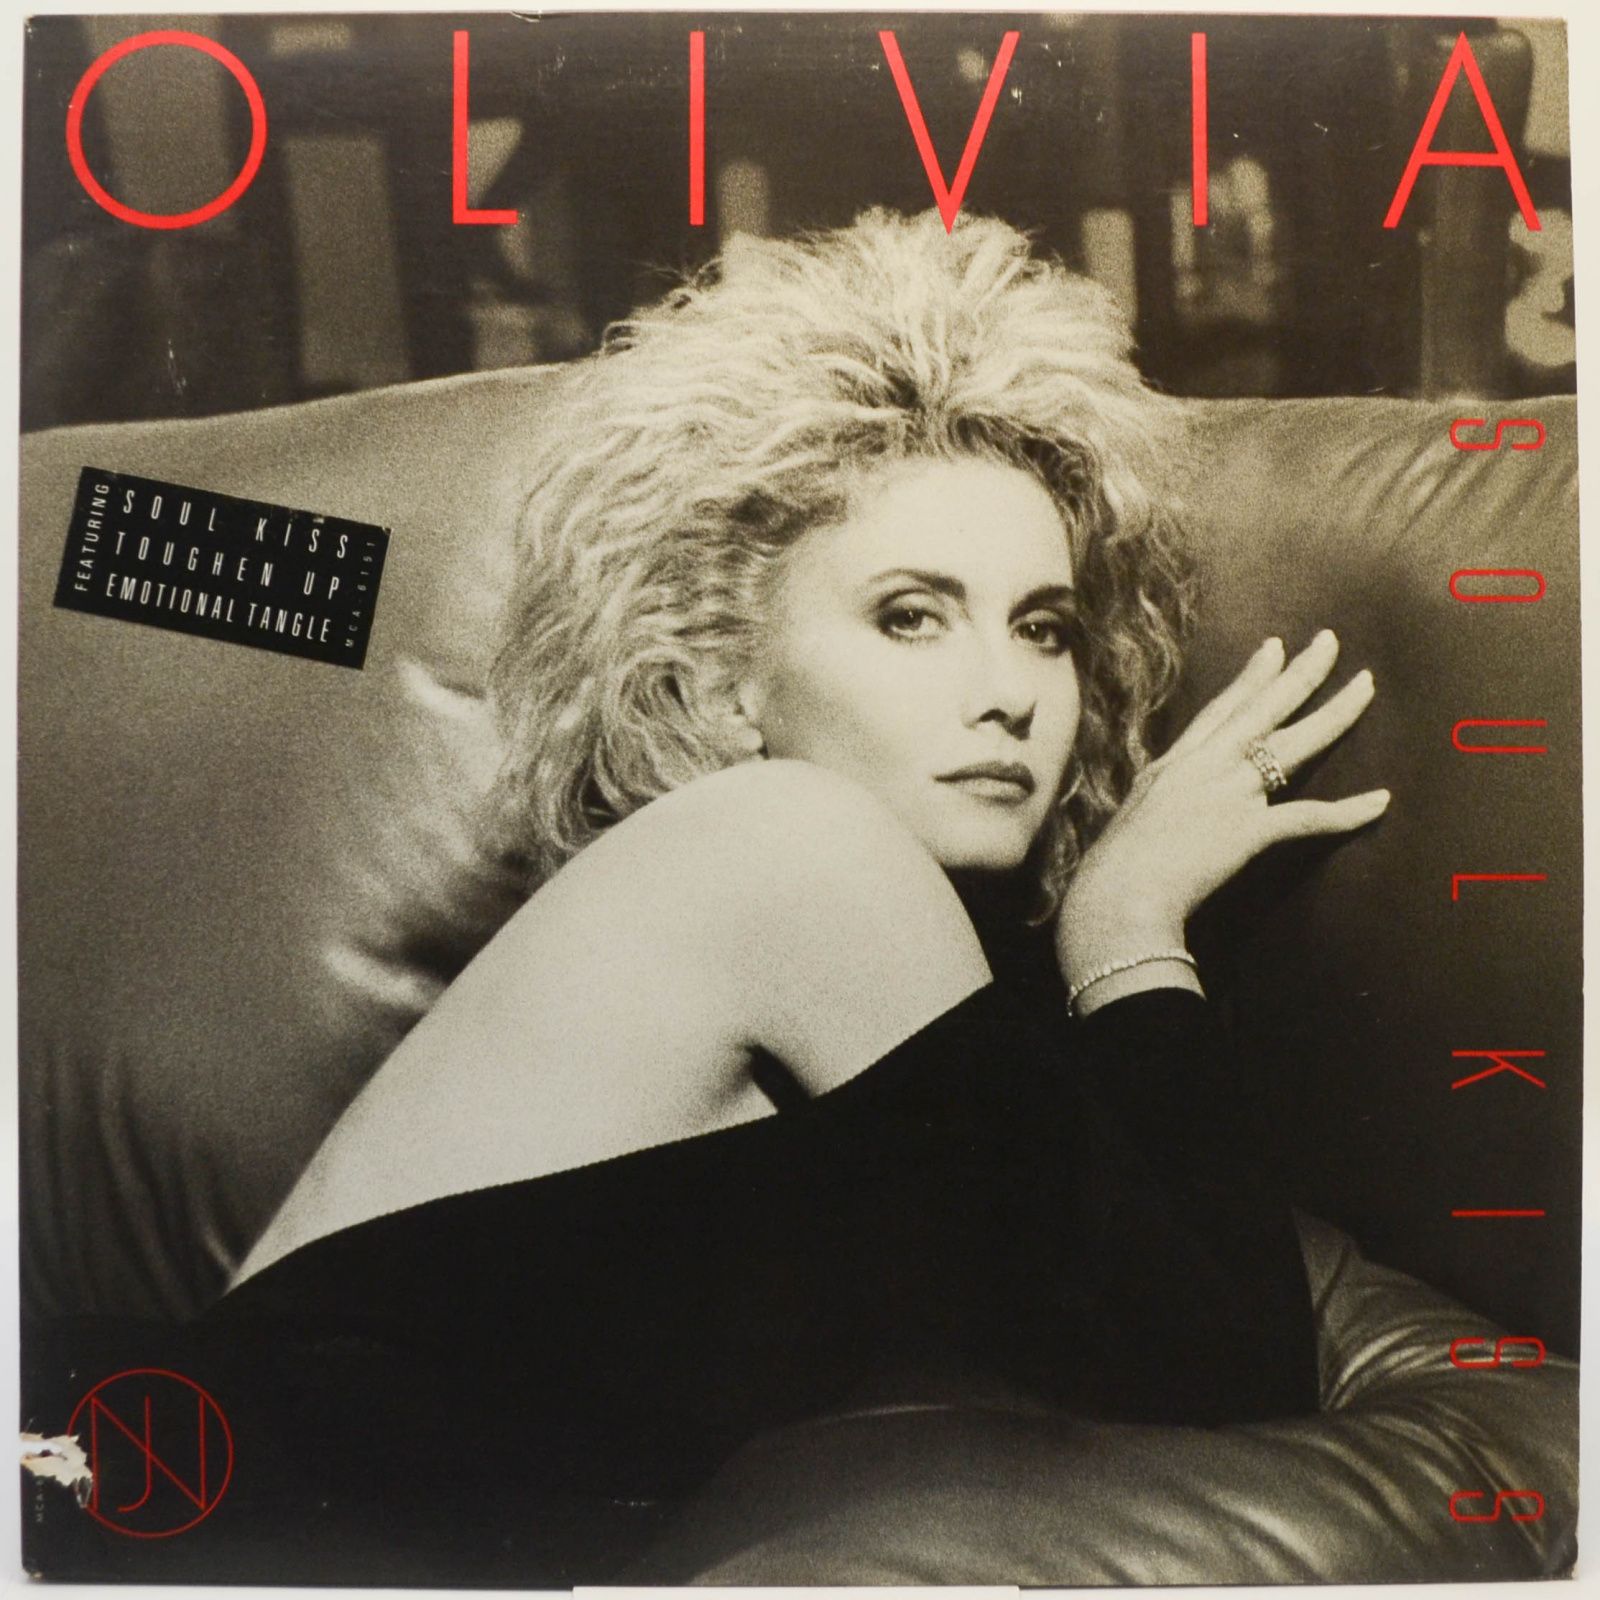 Olivia — Soul Kiss, 1985